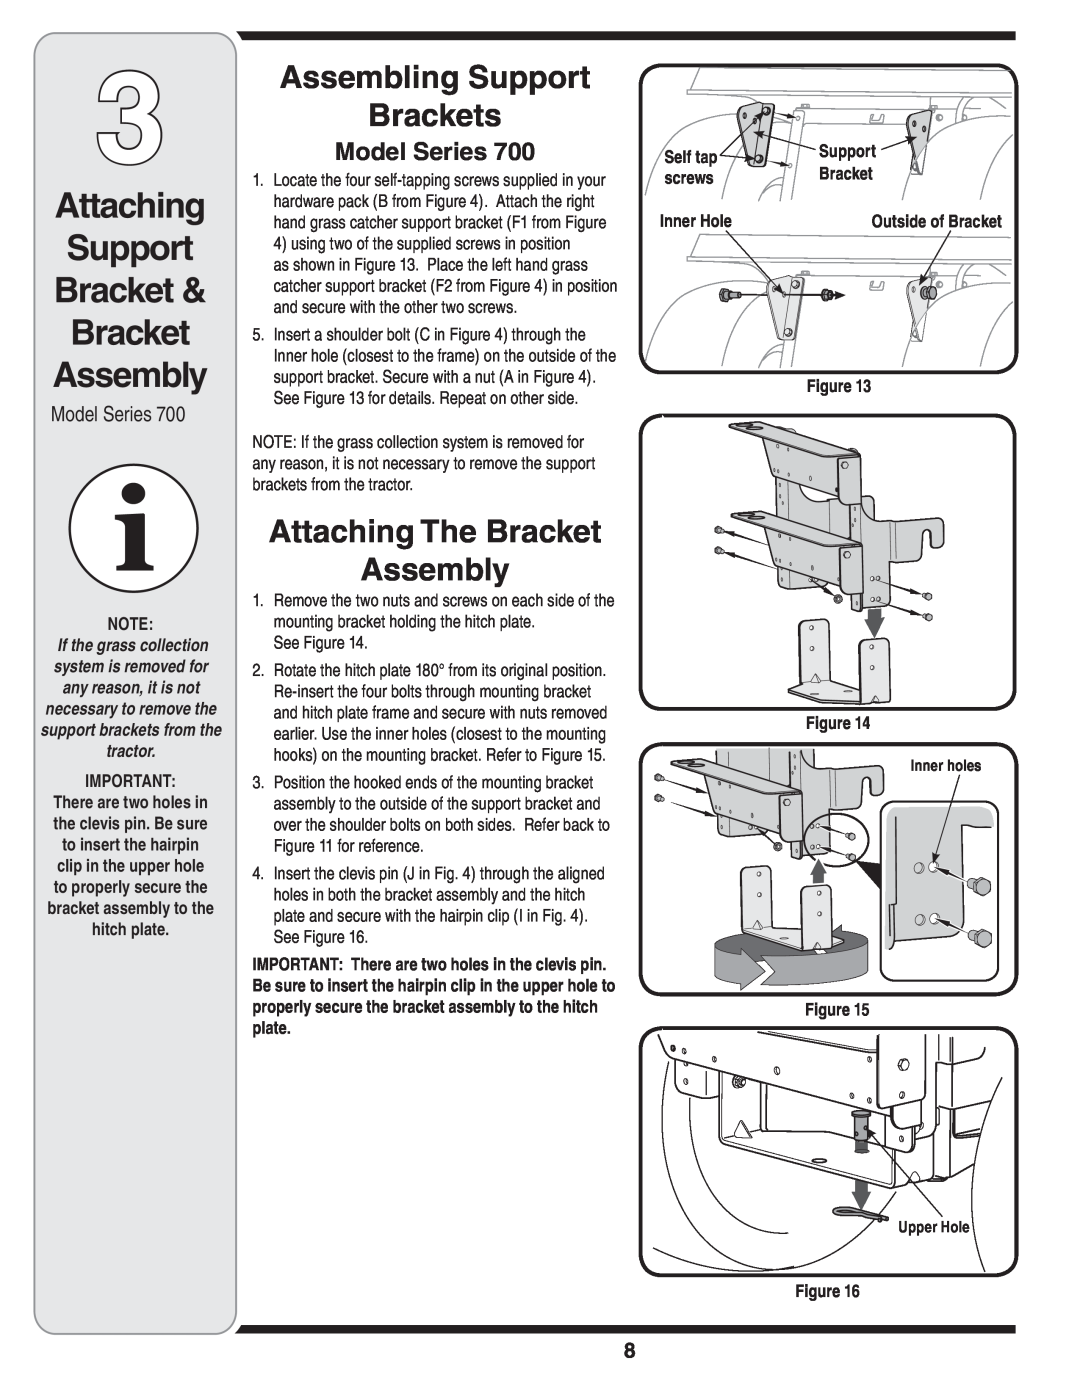 MTD 190-180 Model Series, Attaching Support Bracket Bracket Assembly, Assembling Support Brackets, Self tap, screws 